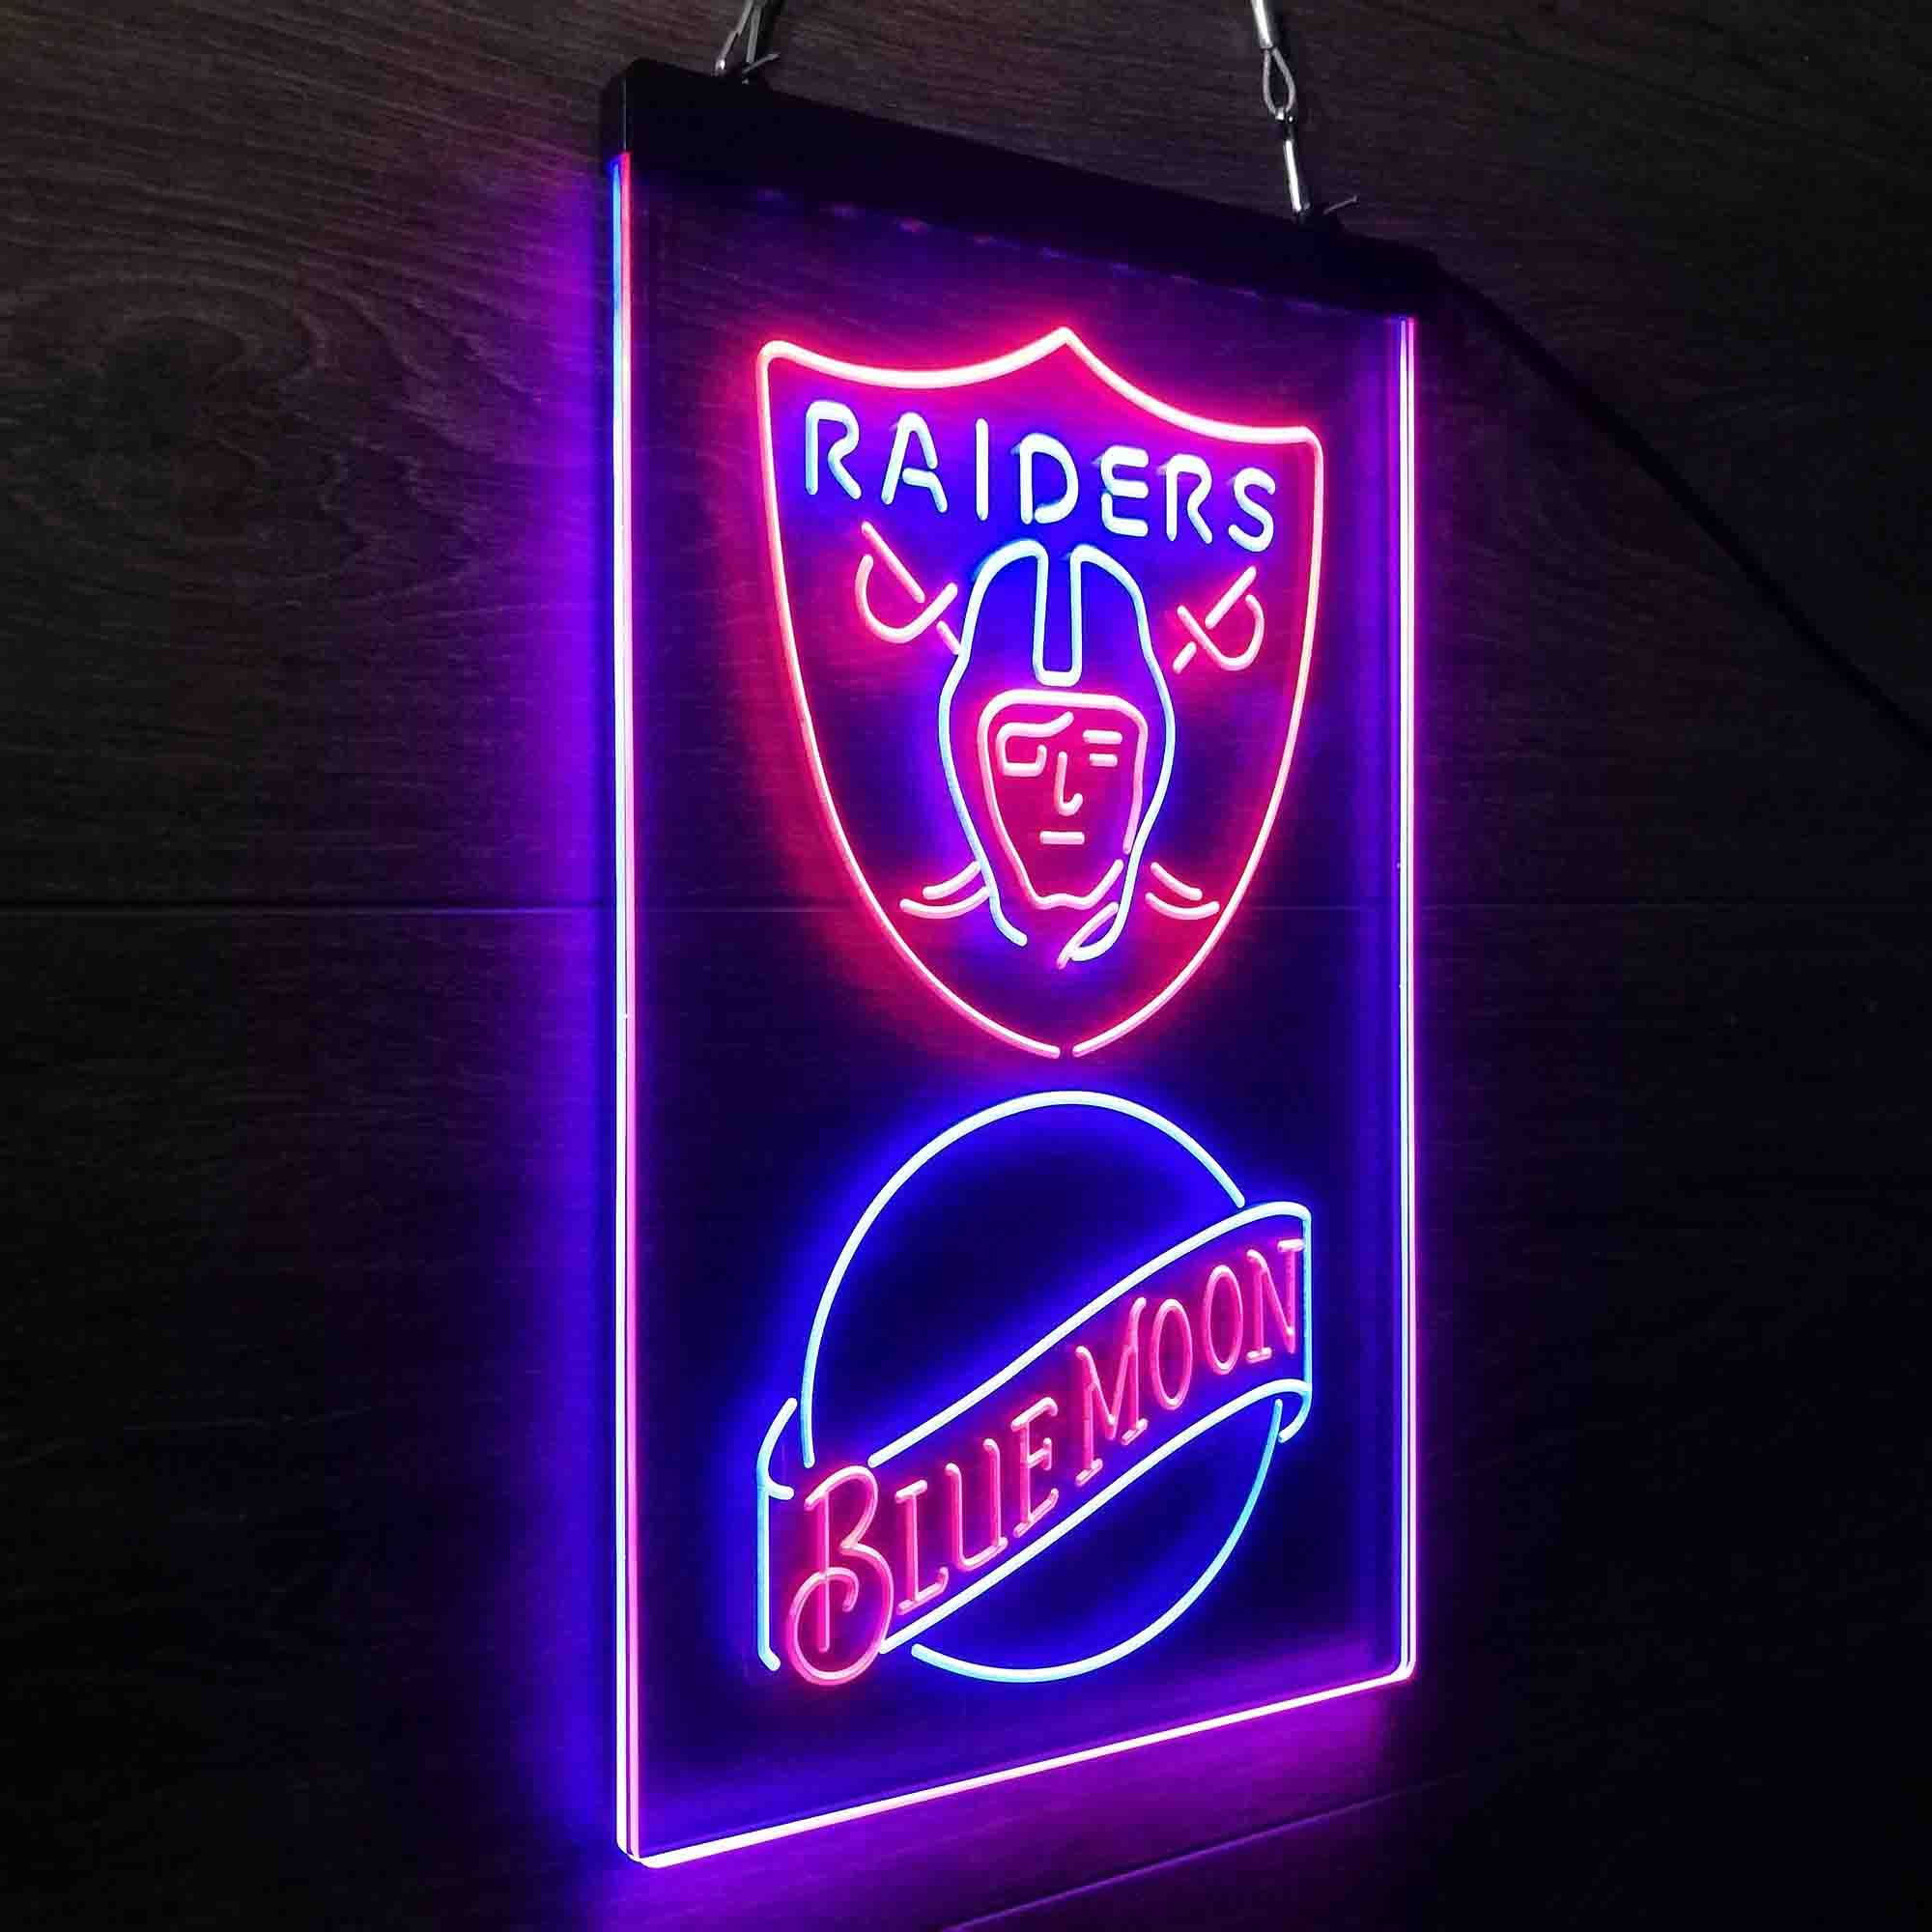 Blue Moon Bar Oakland Raiders Est. 1960 LED Neon Sign